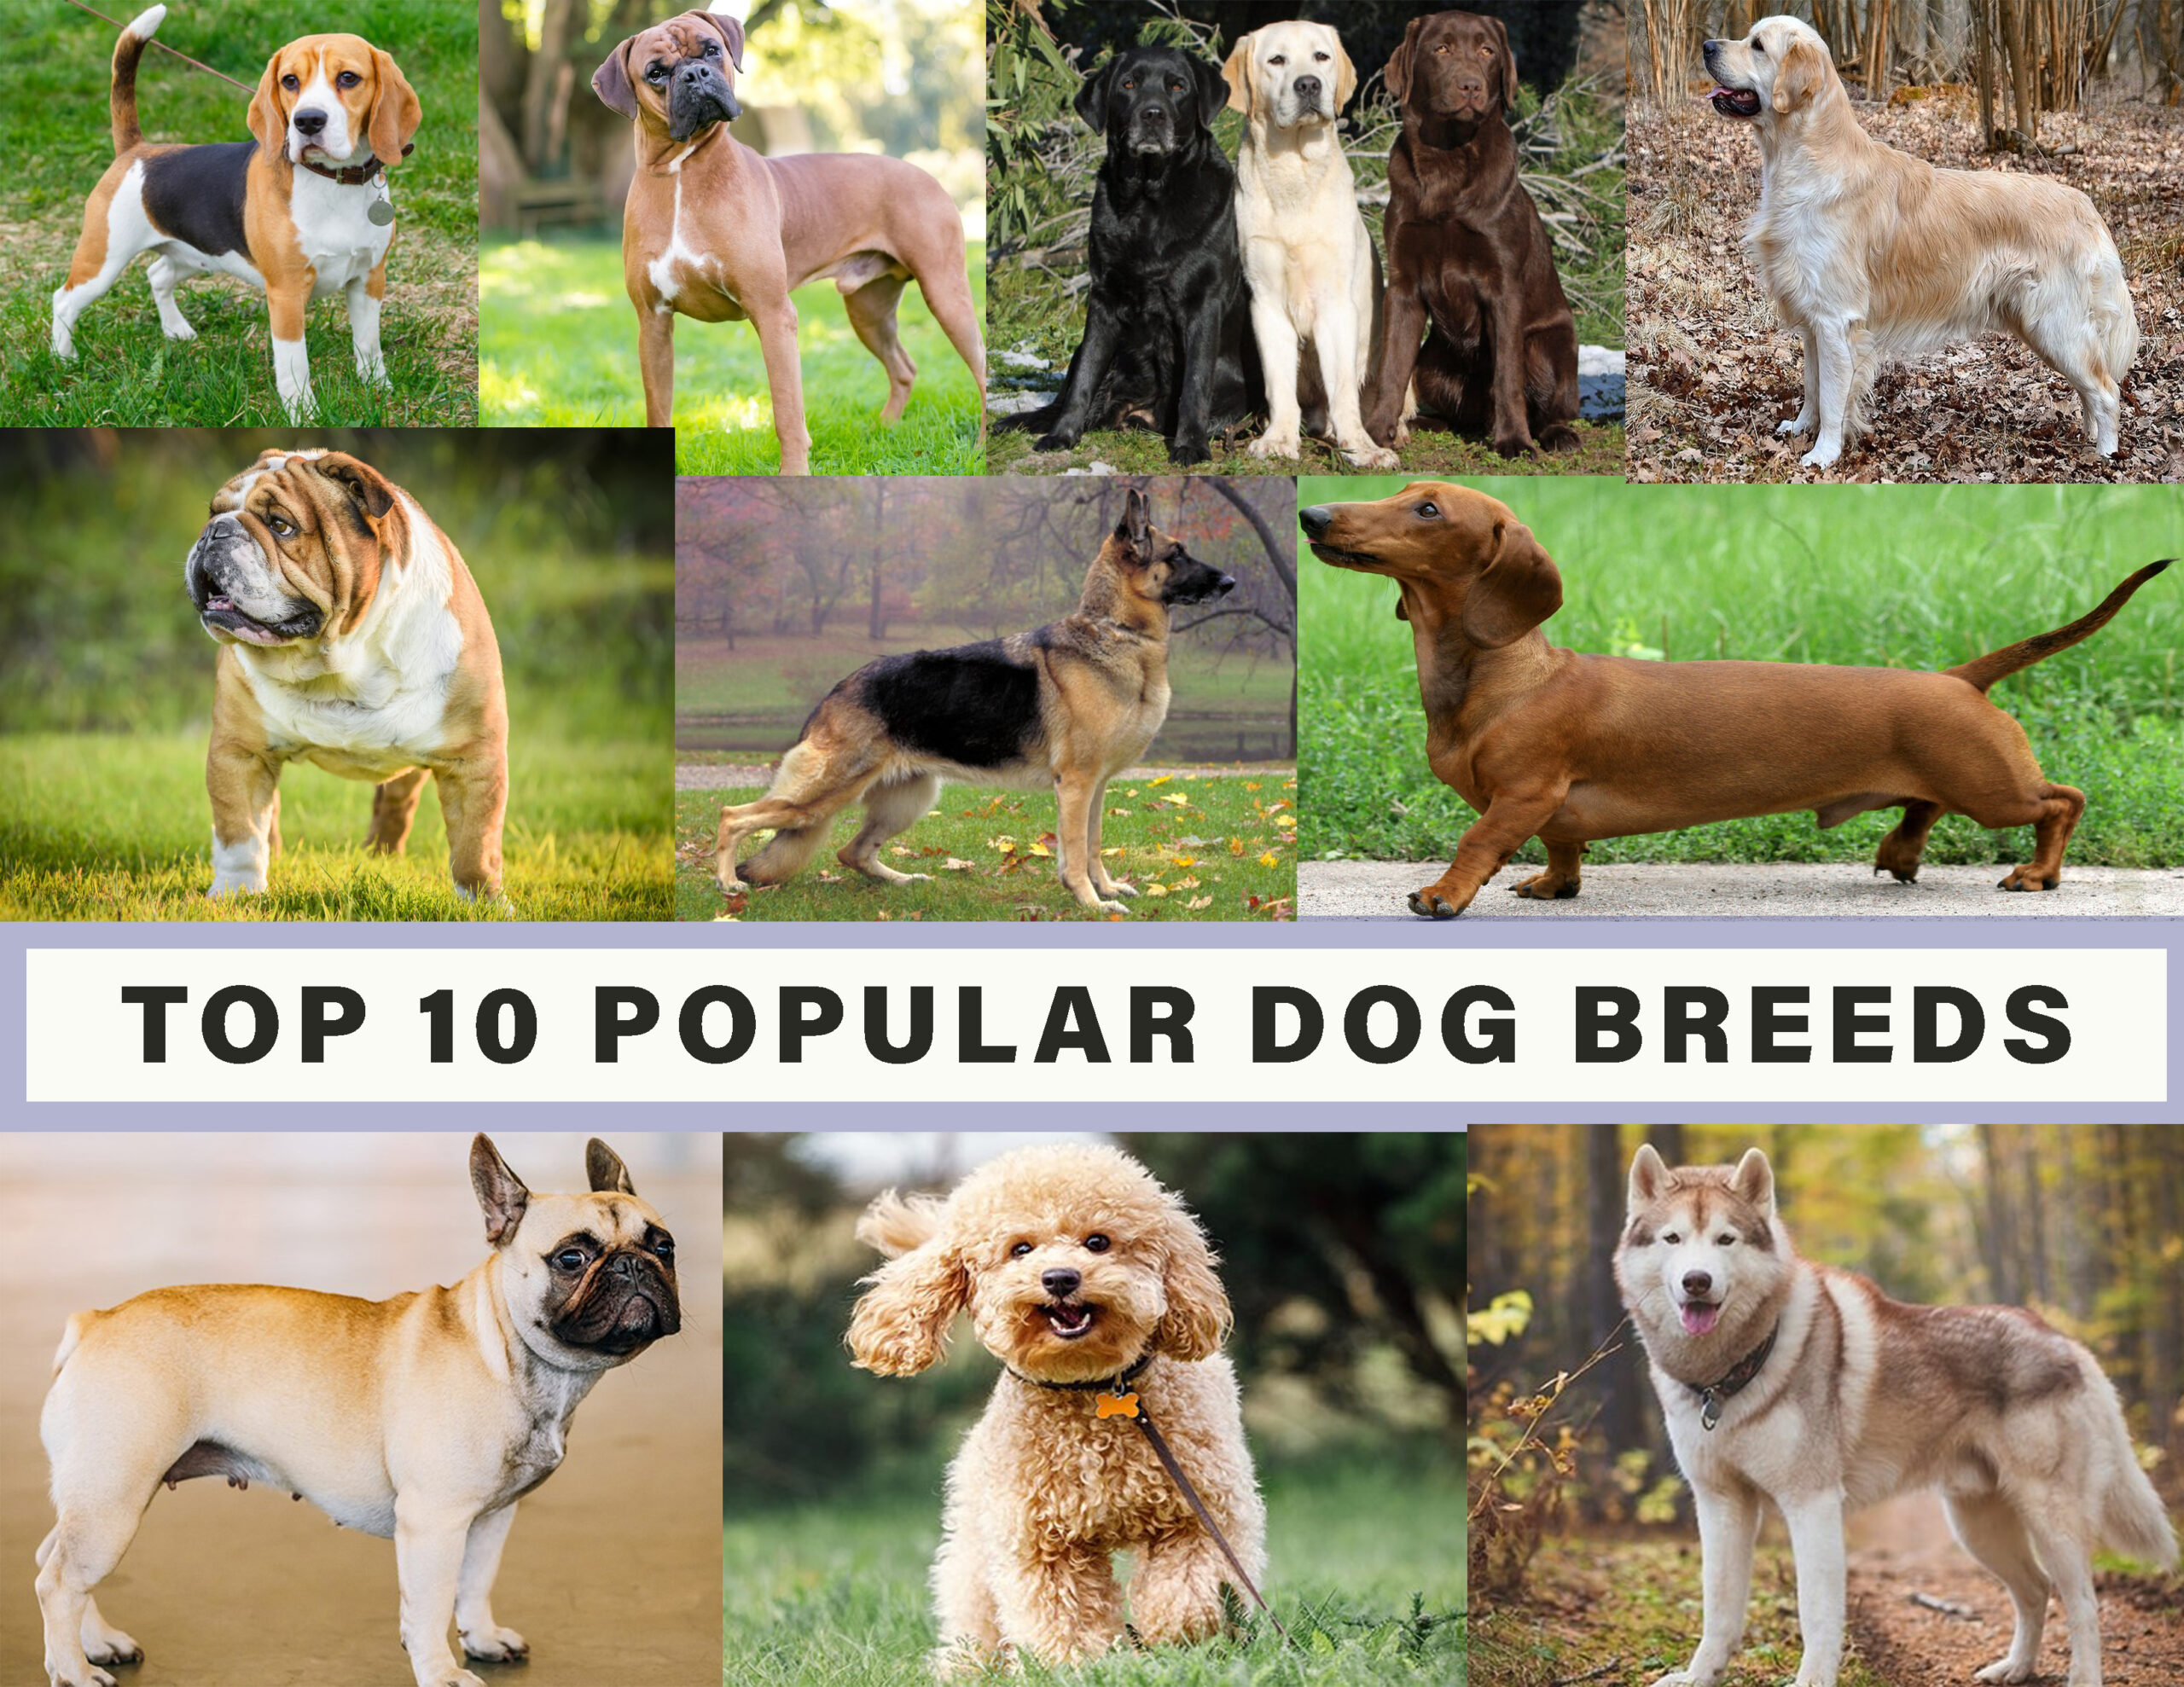 Popular Dog Breeds